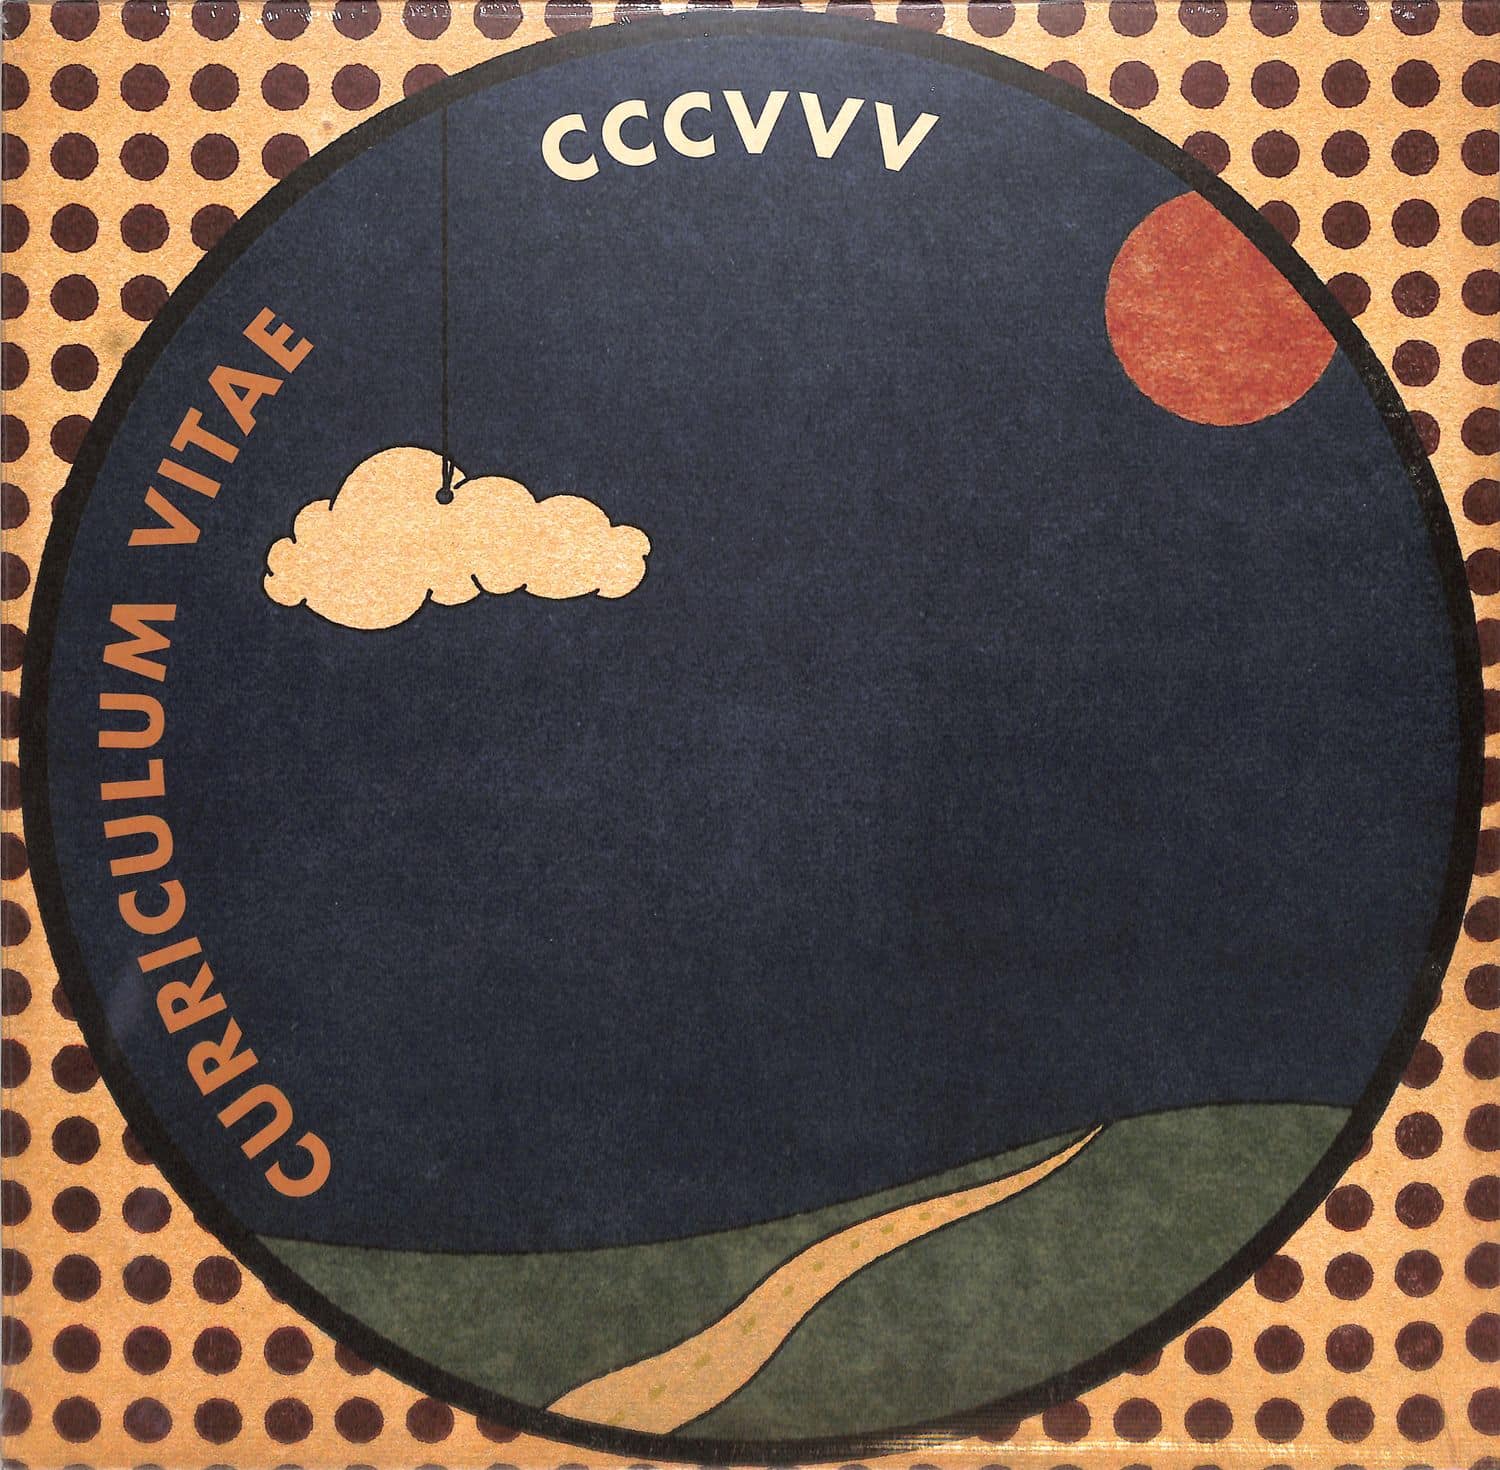 Cccvvv - CURRICULUM VITAE LP 